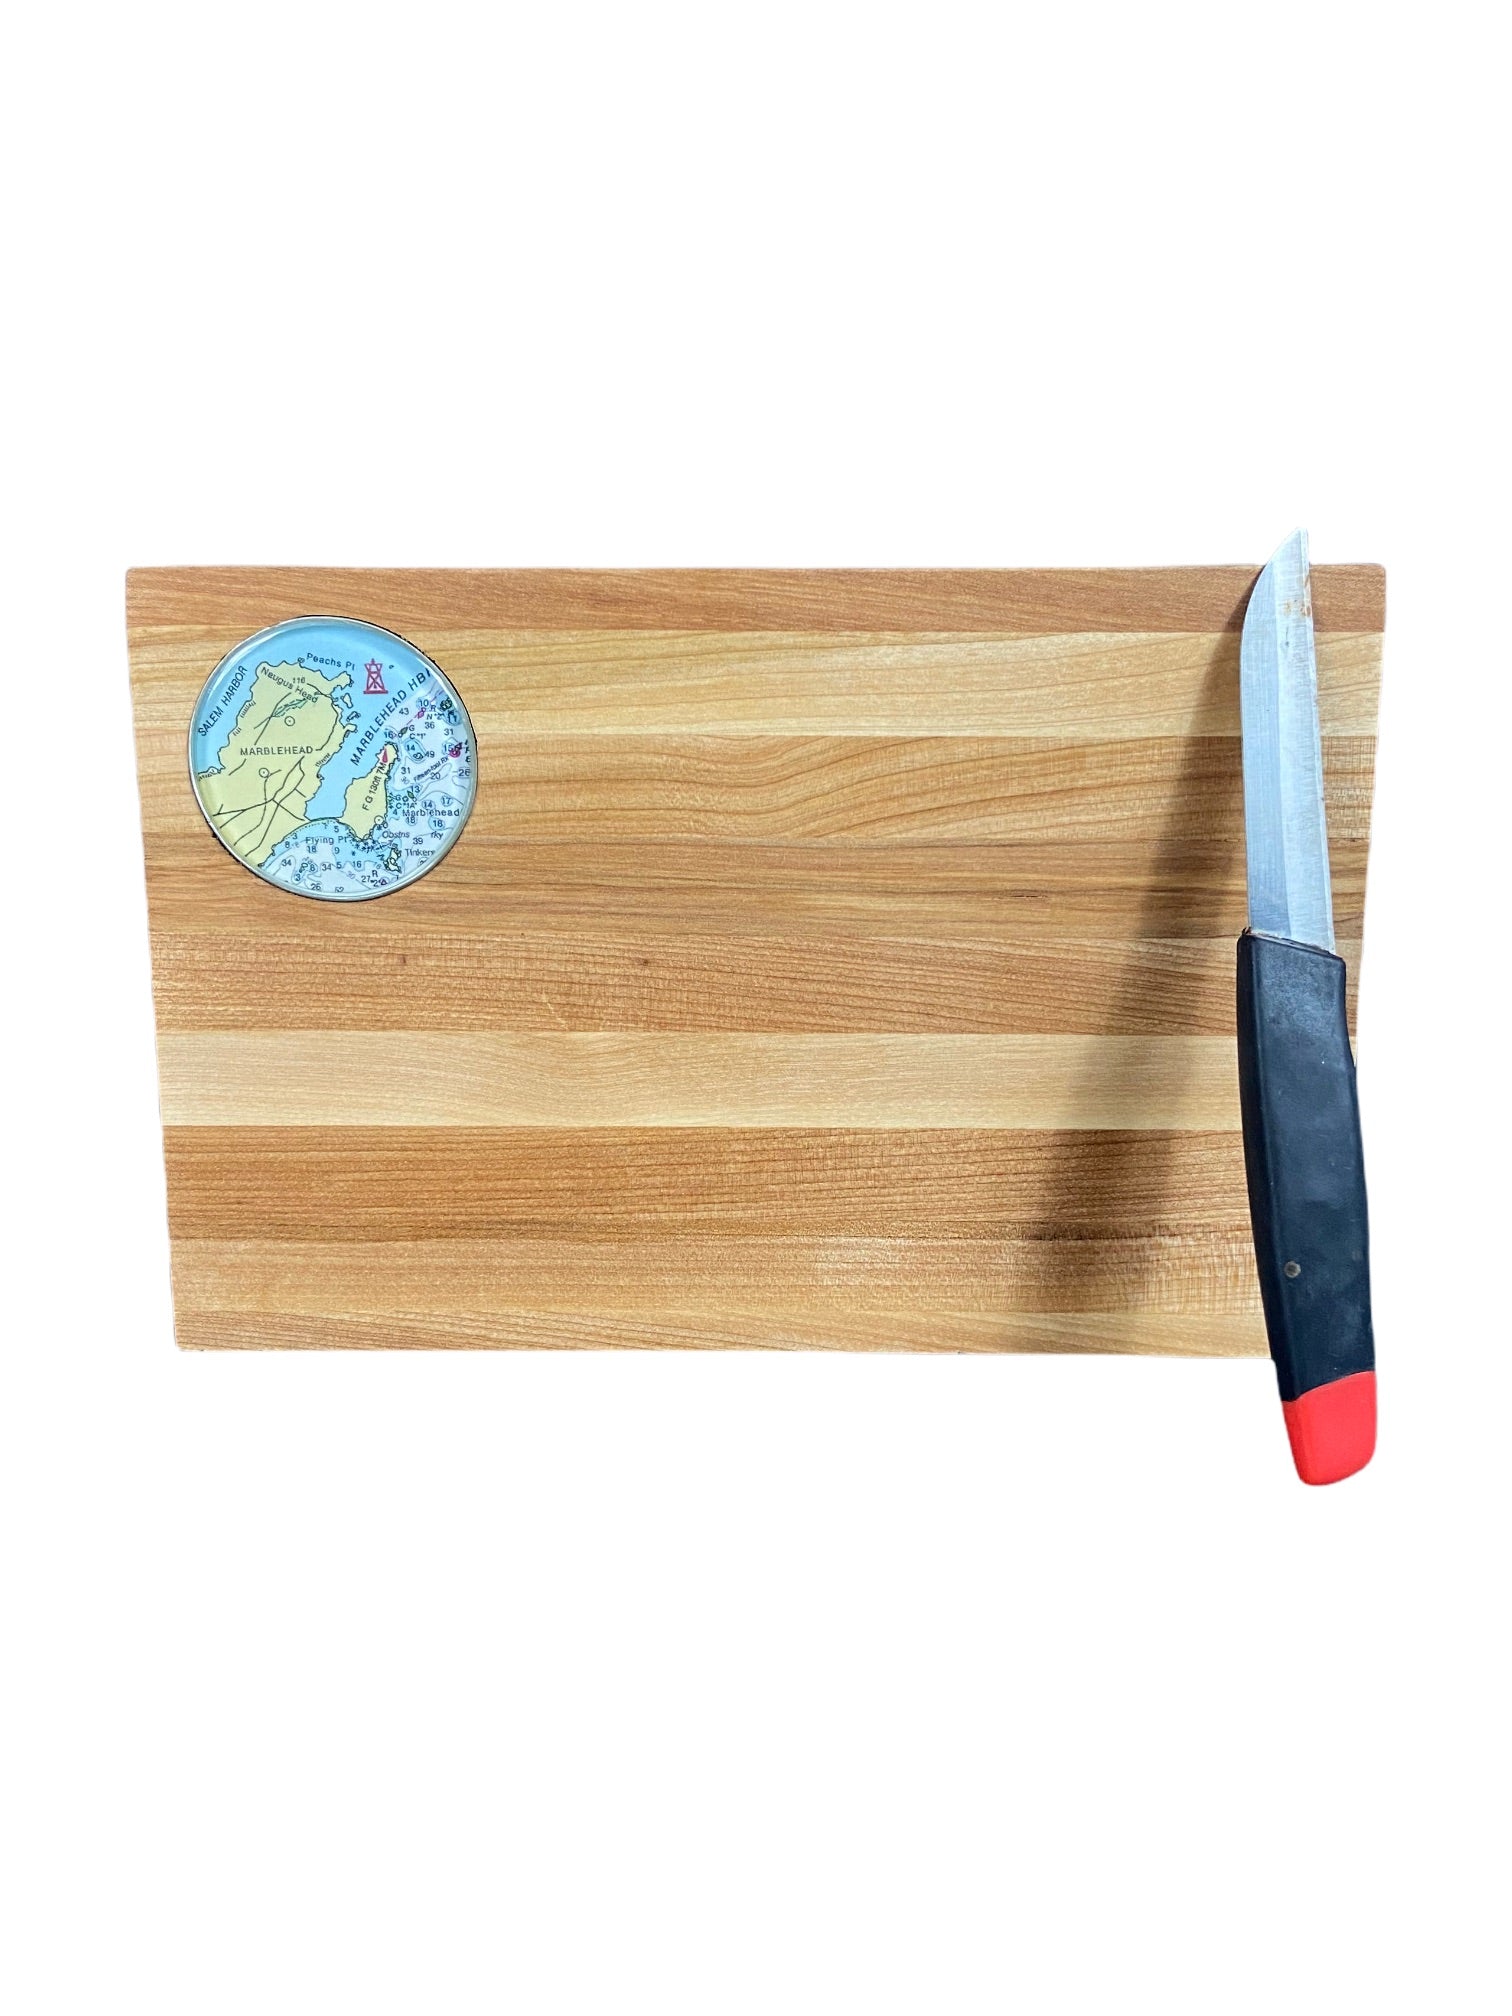 5-O'clock Cutting Board - WOOD